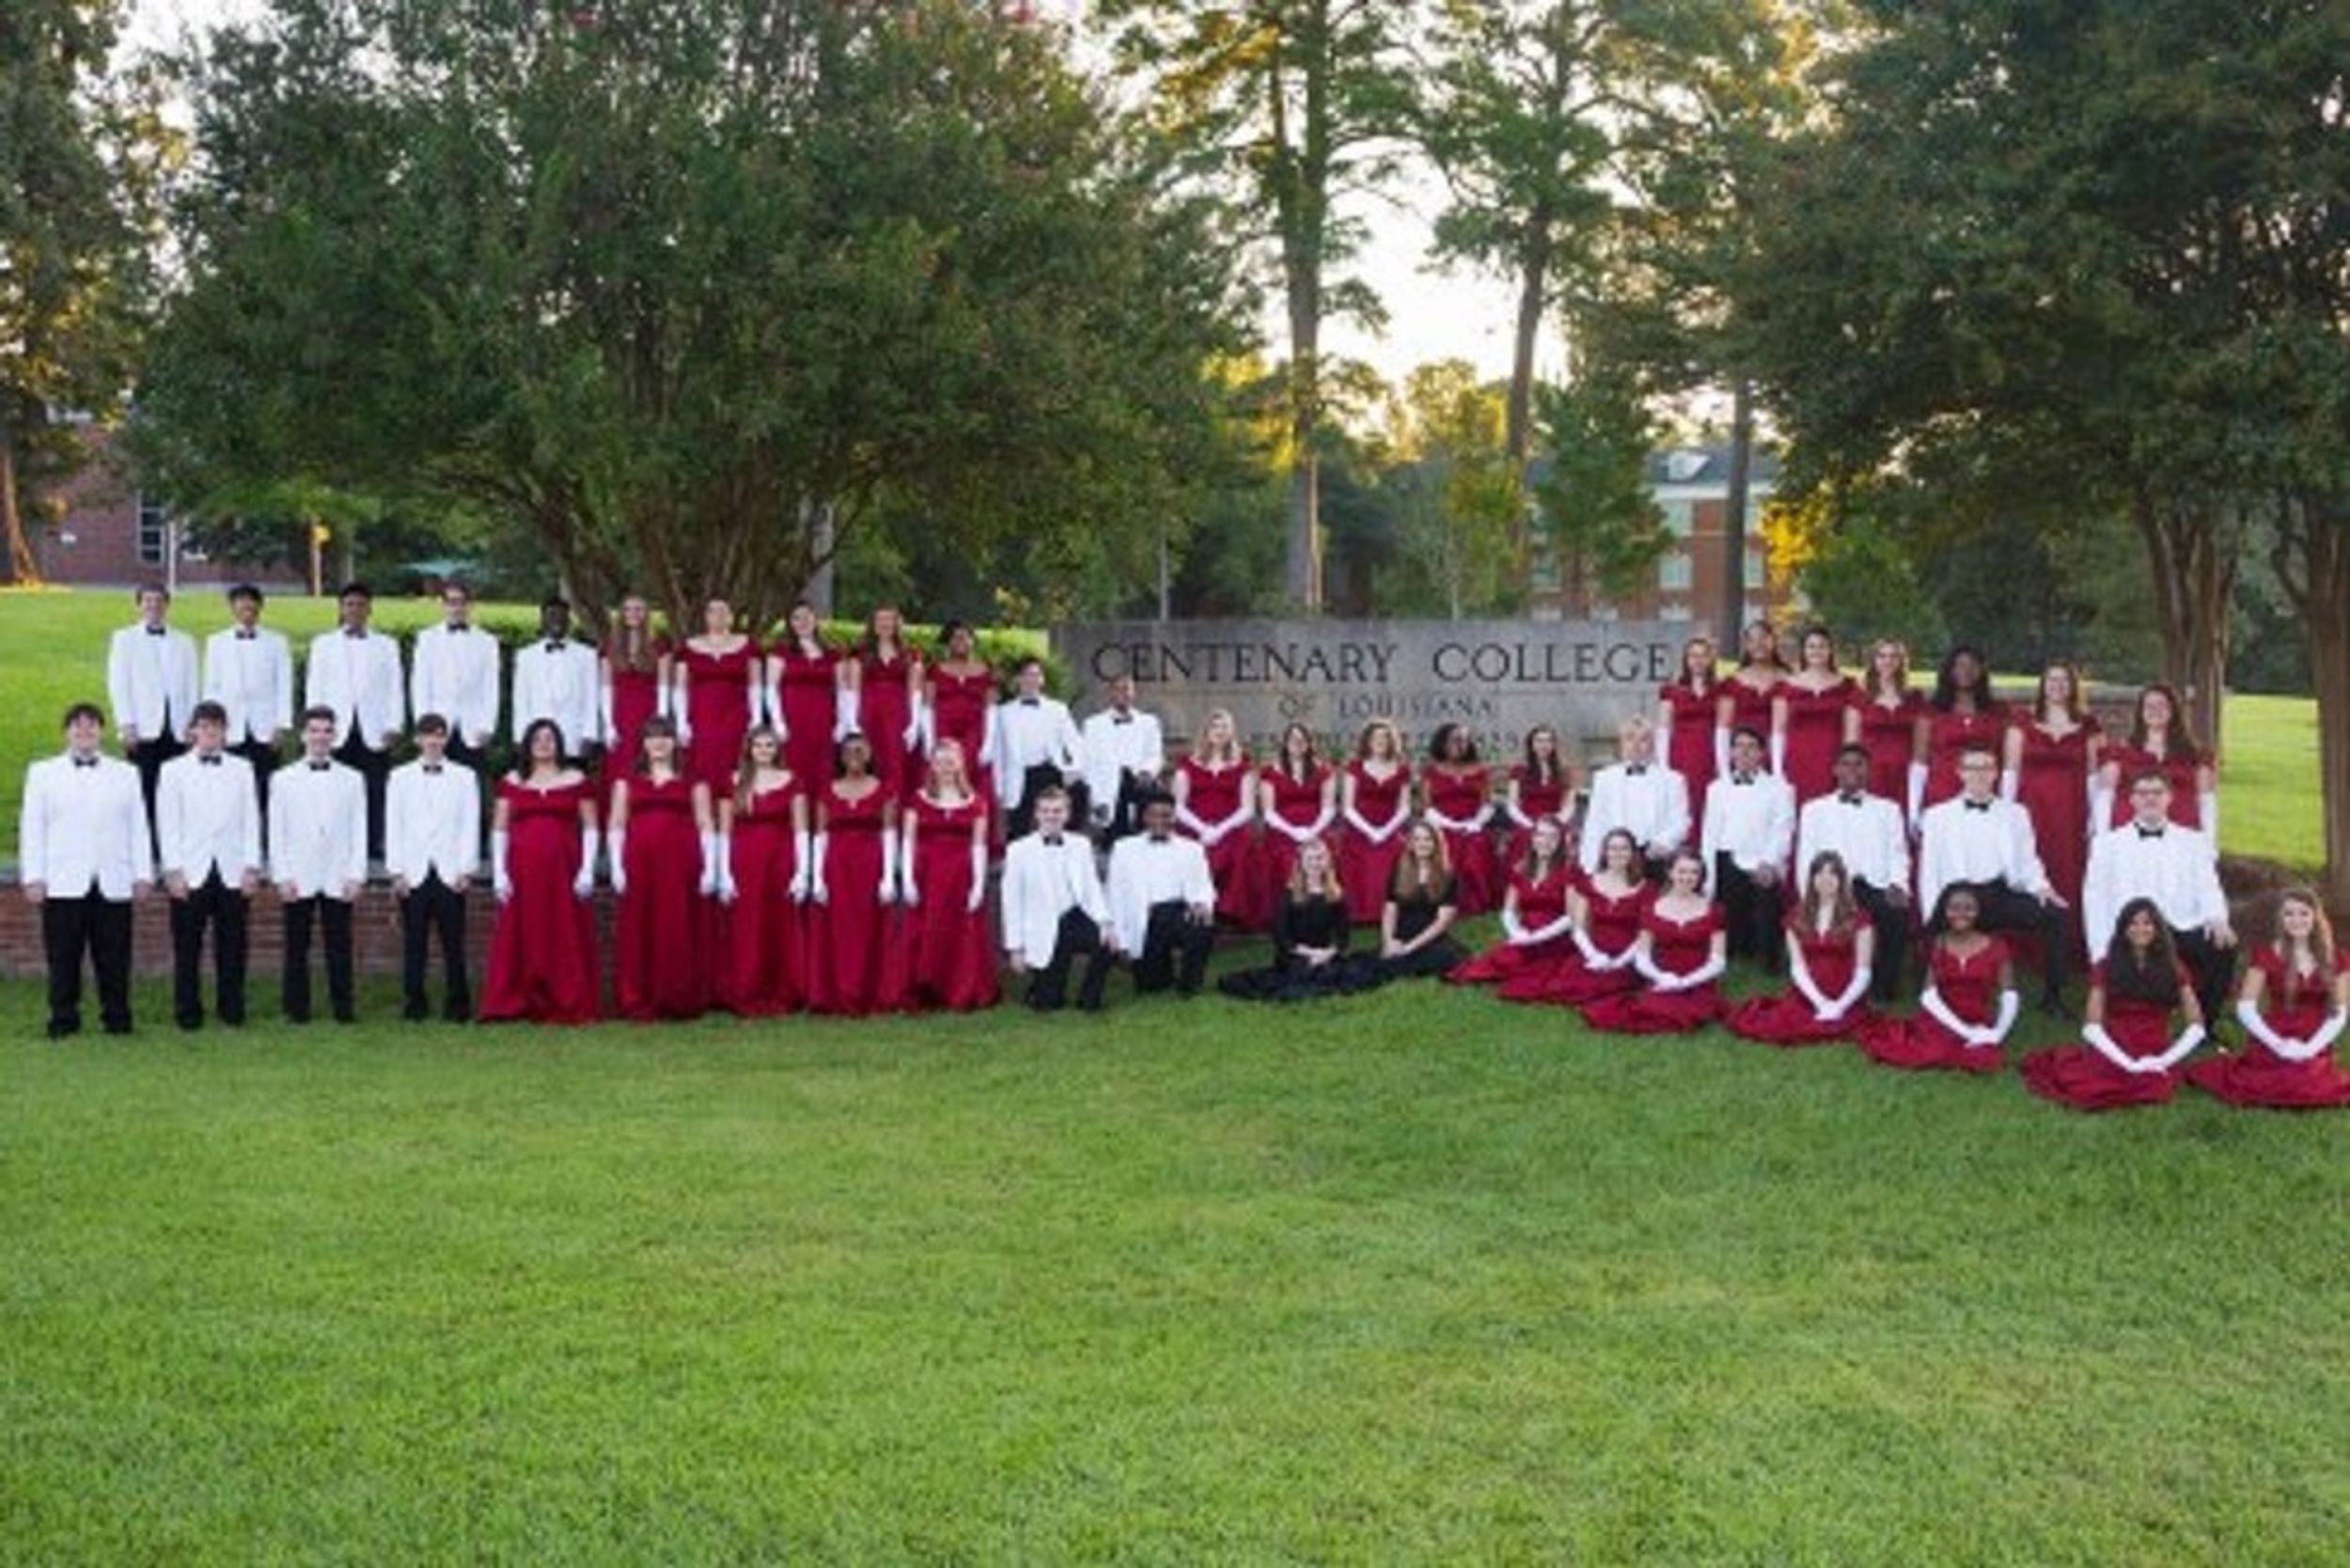 The Centenary College Choir Family